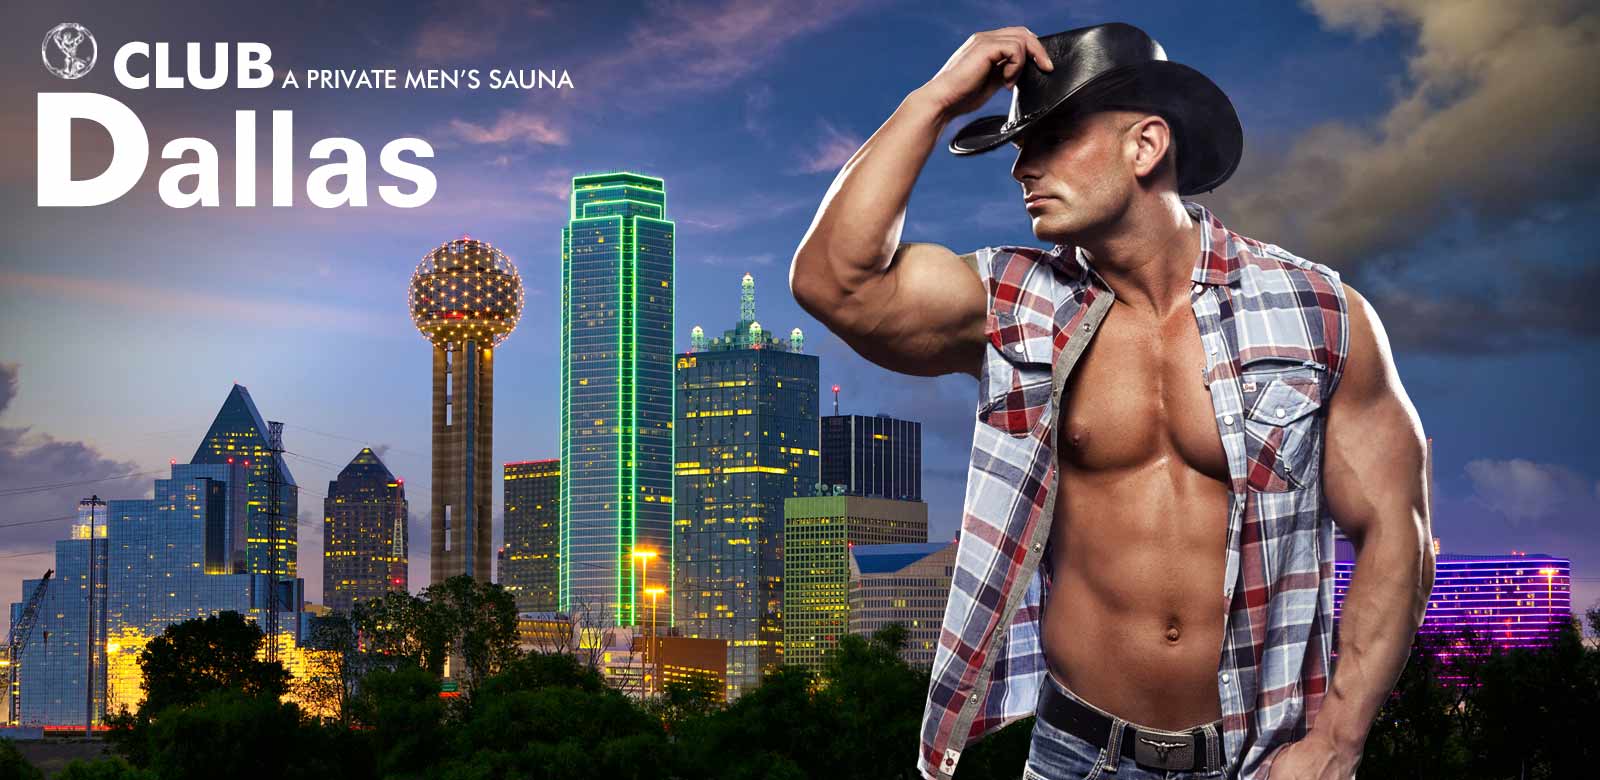 Club Saunas - Club Dallas pic